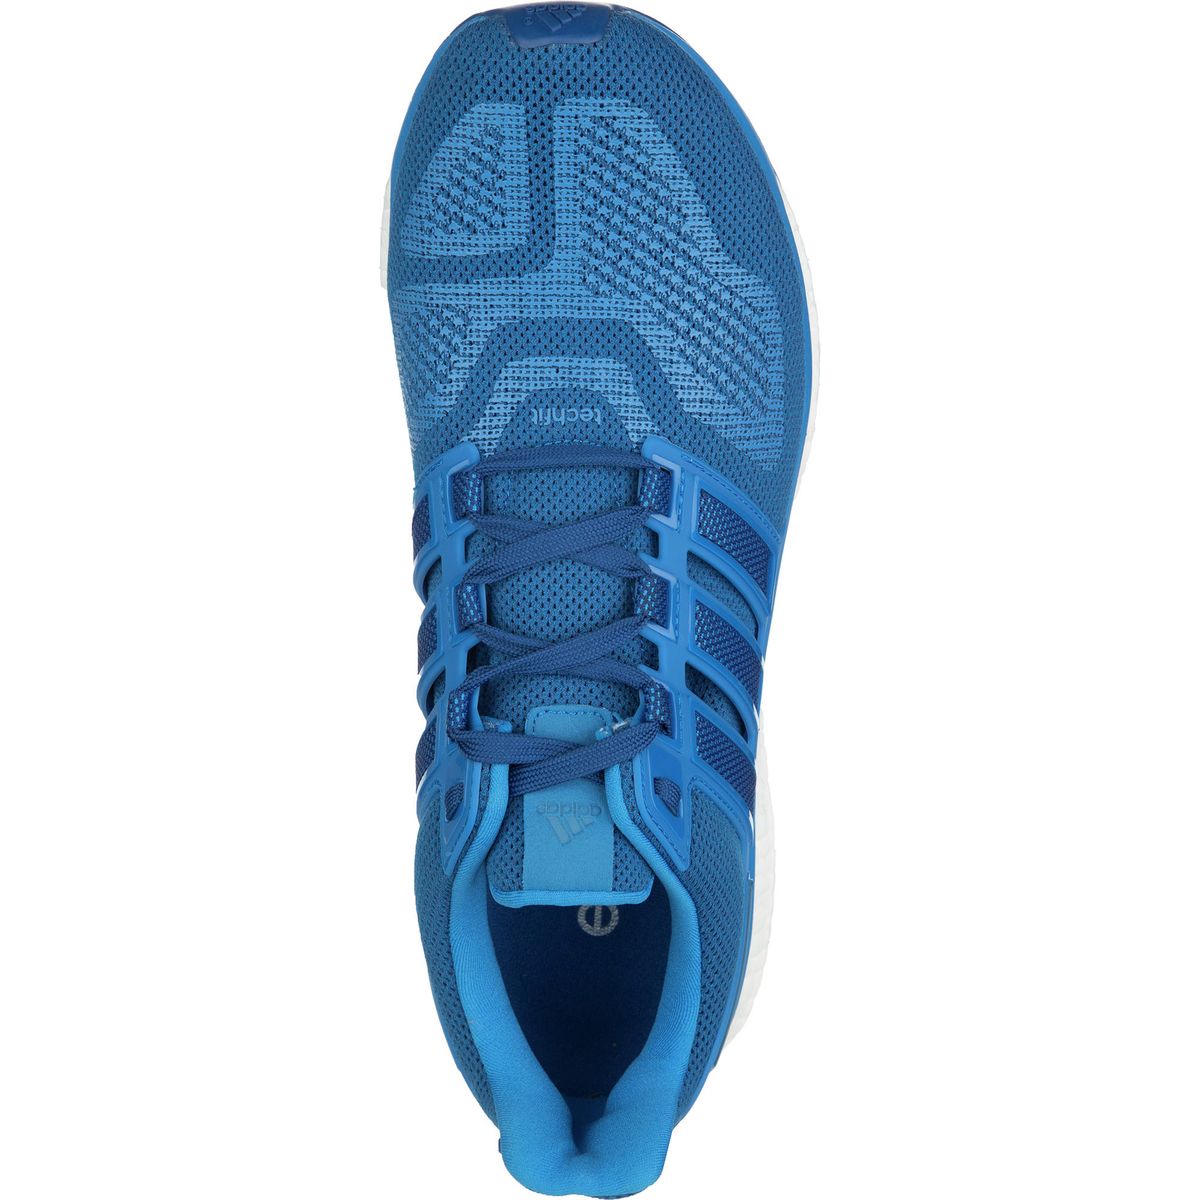 Adidas Energy Boost 3 Running Shoe - Men's - Men